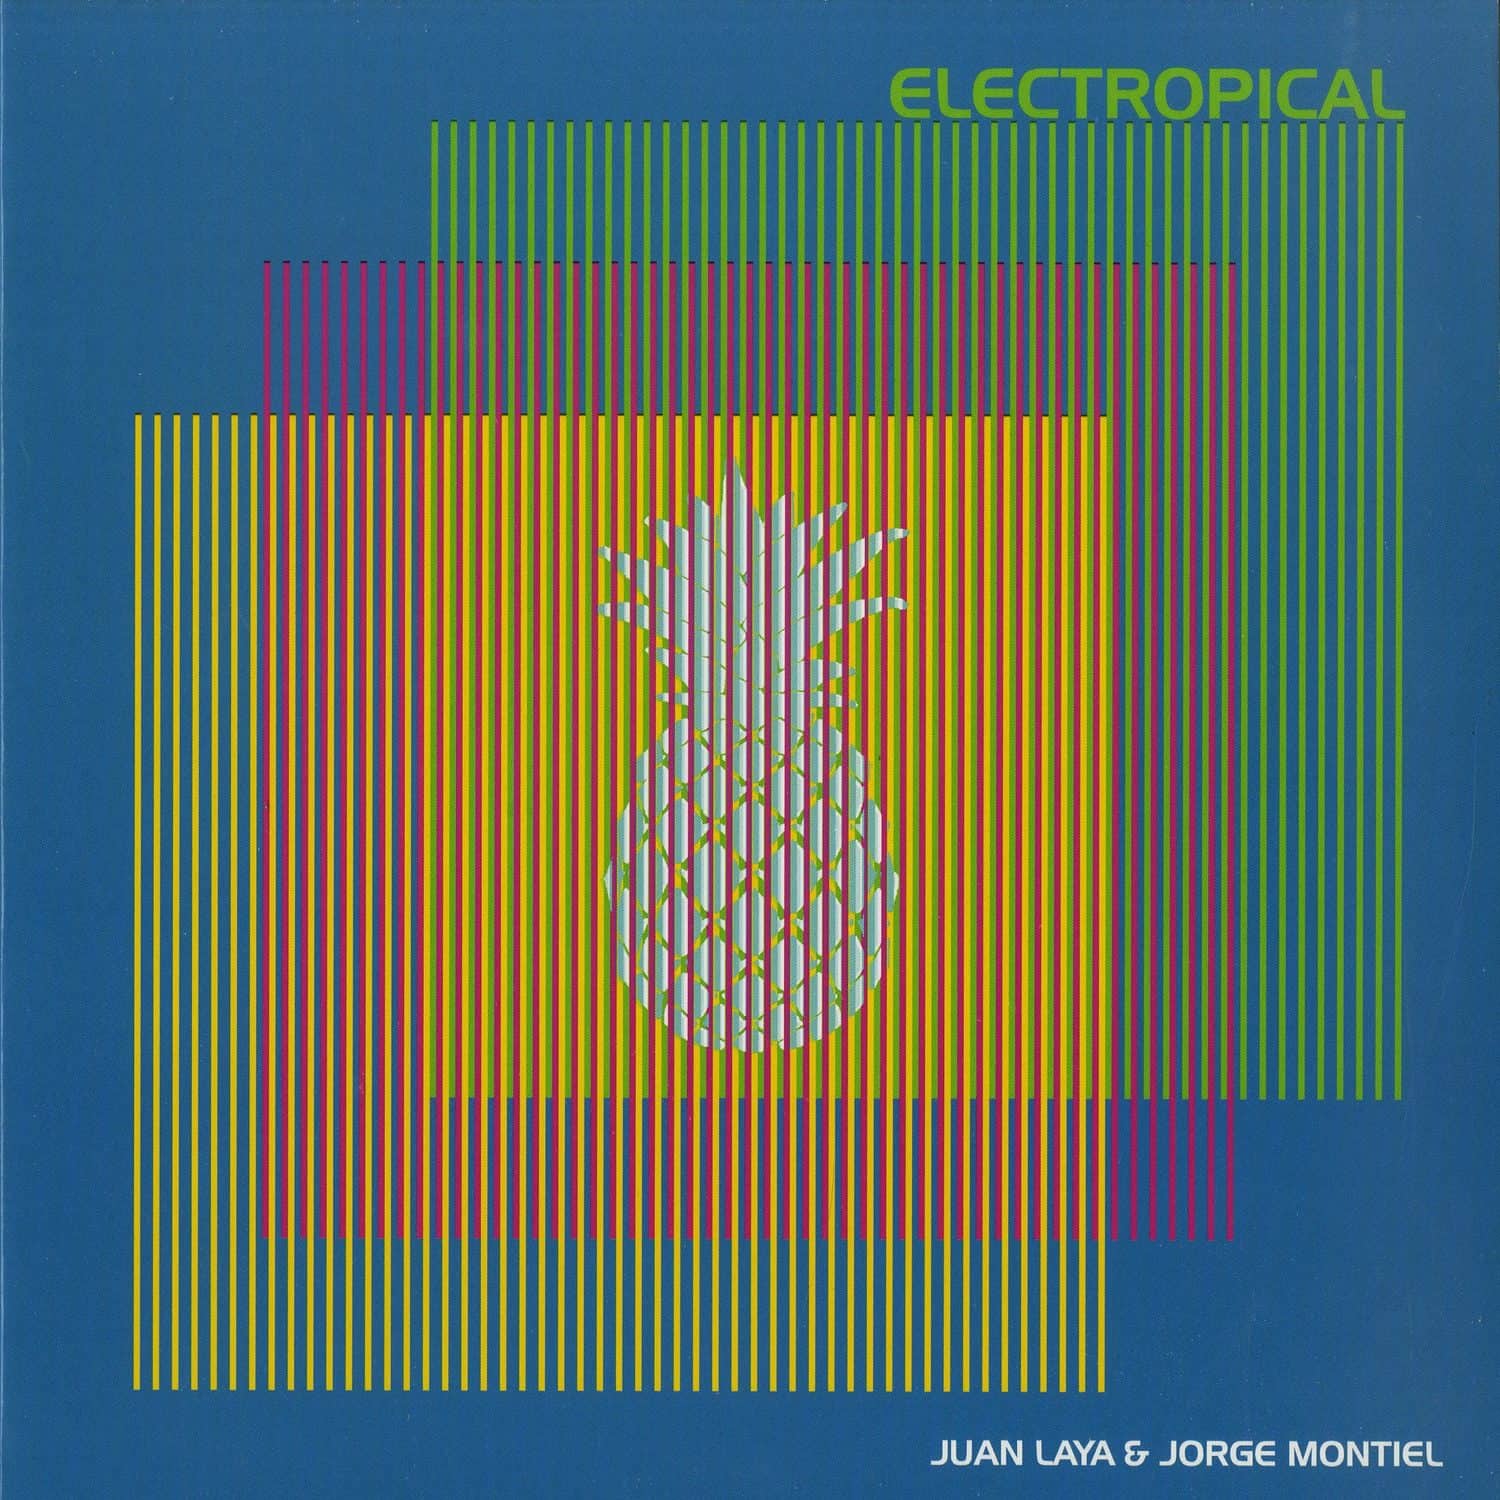 Juan Laya & Jorge Montiel - ELECTROPICAL 